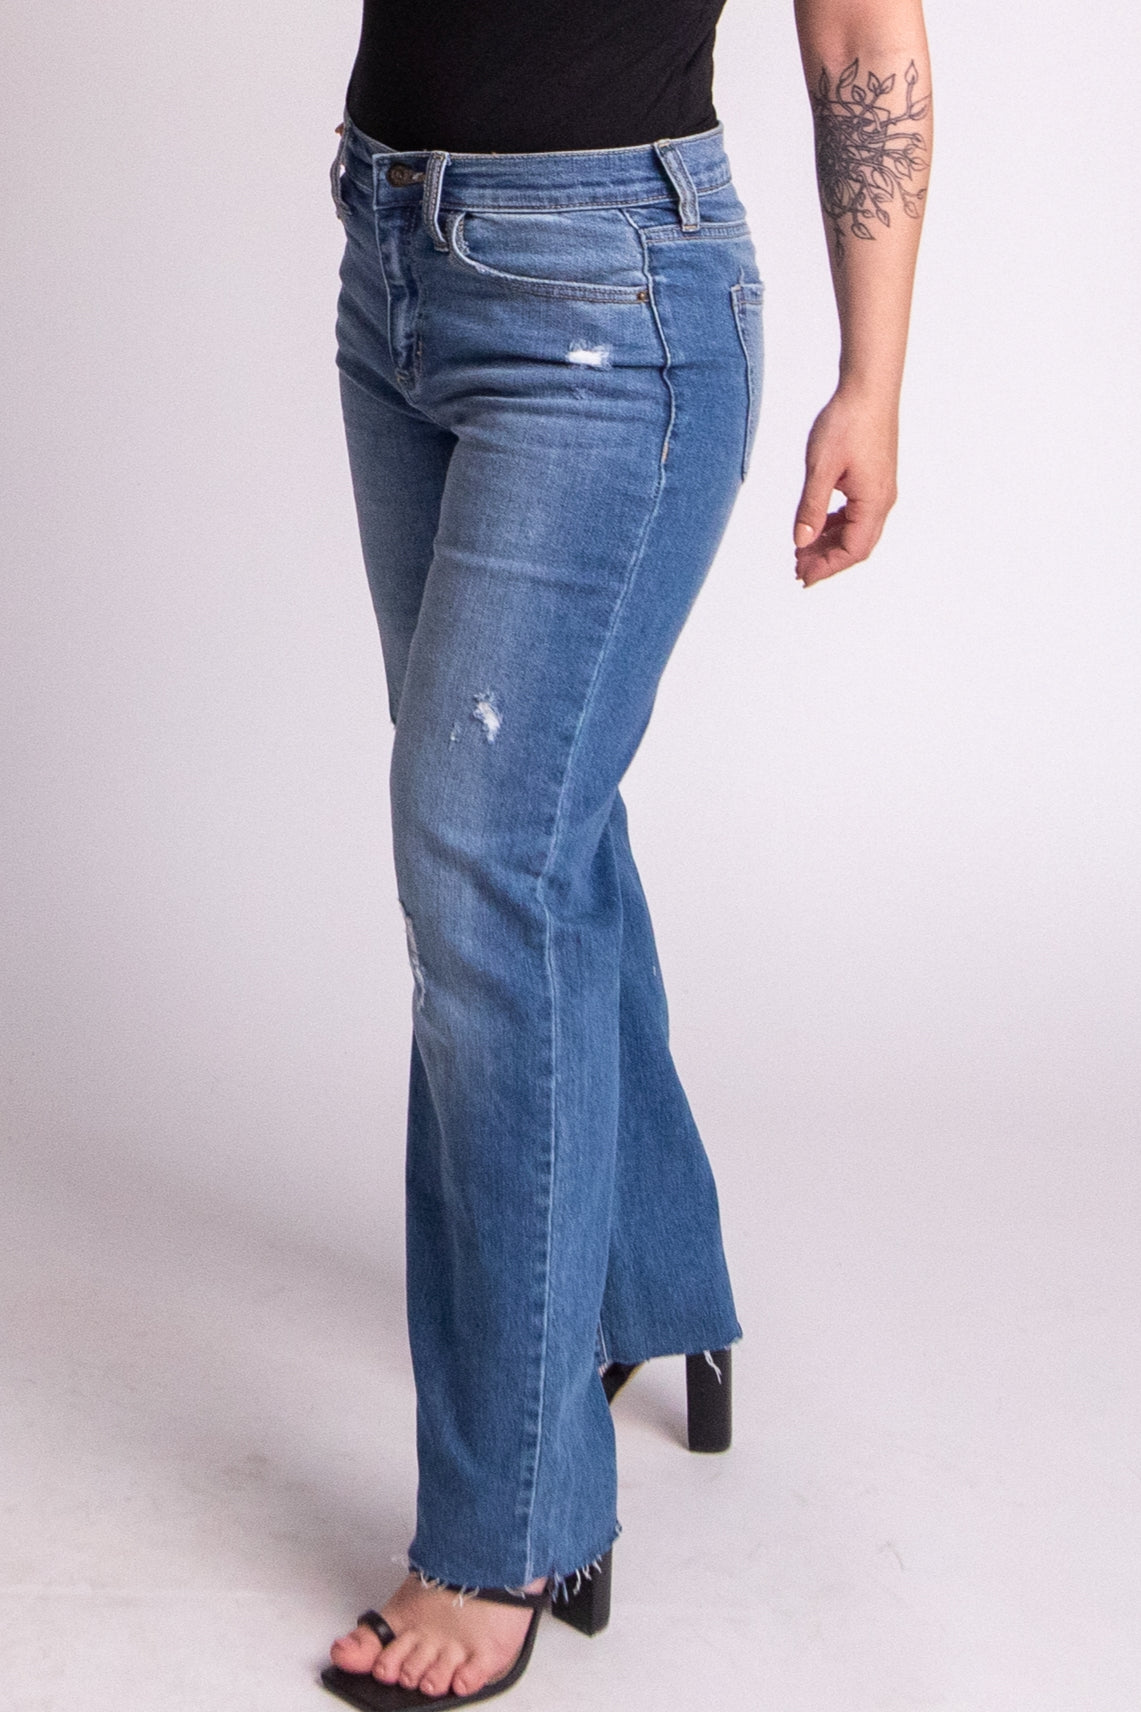 straight leg denim jeans or pants